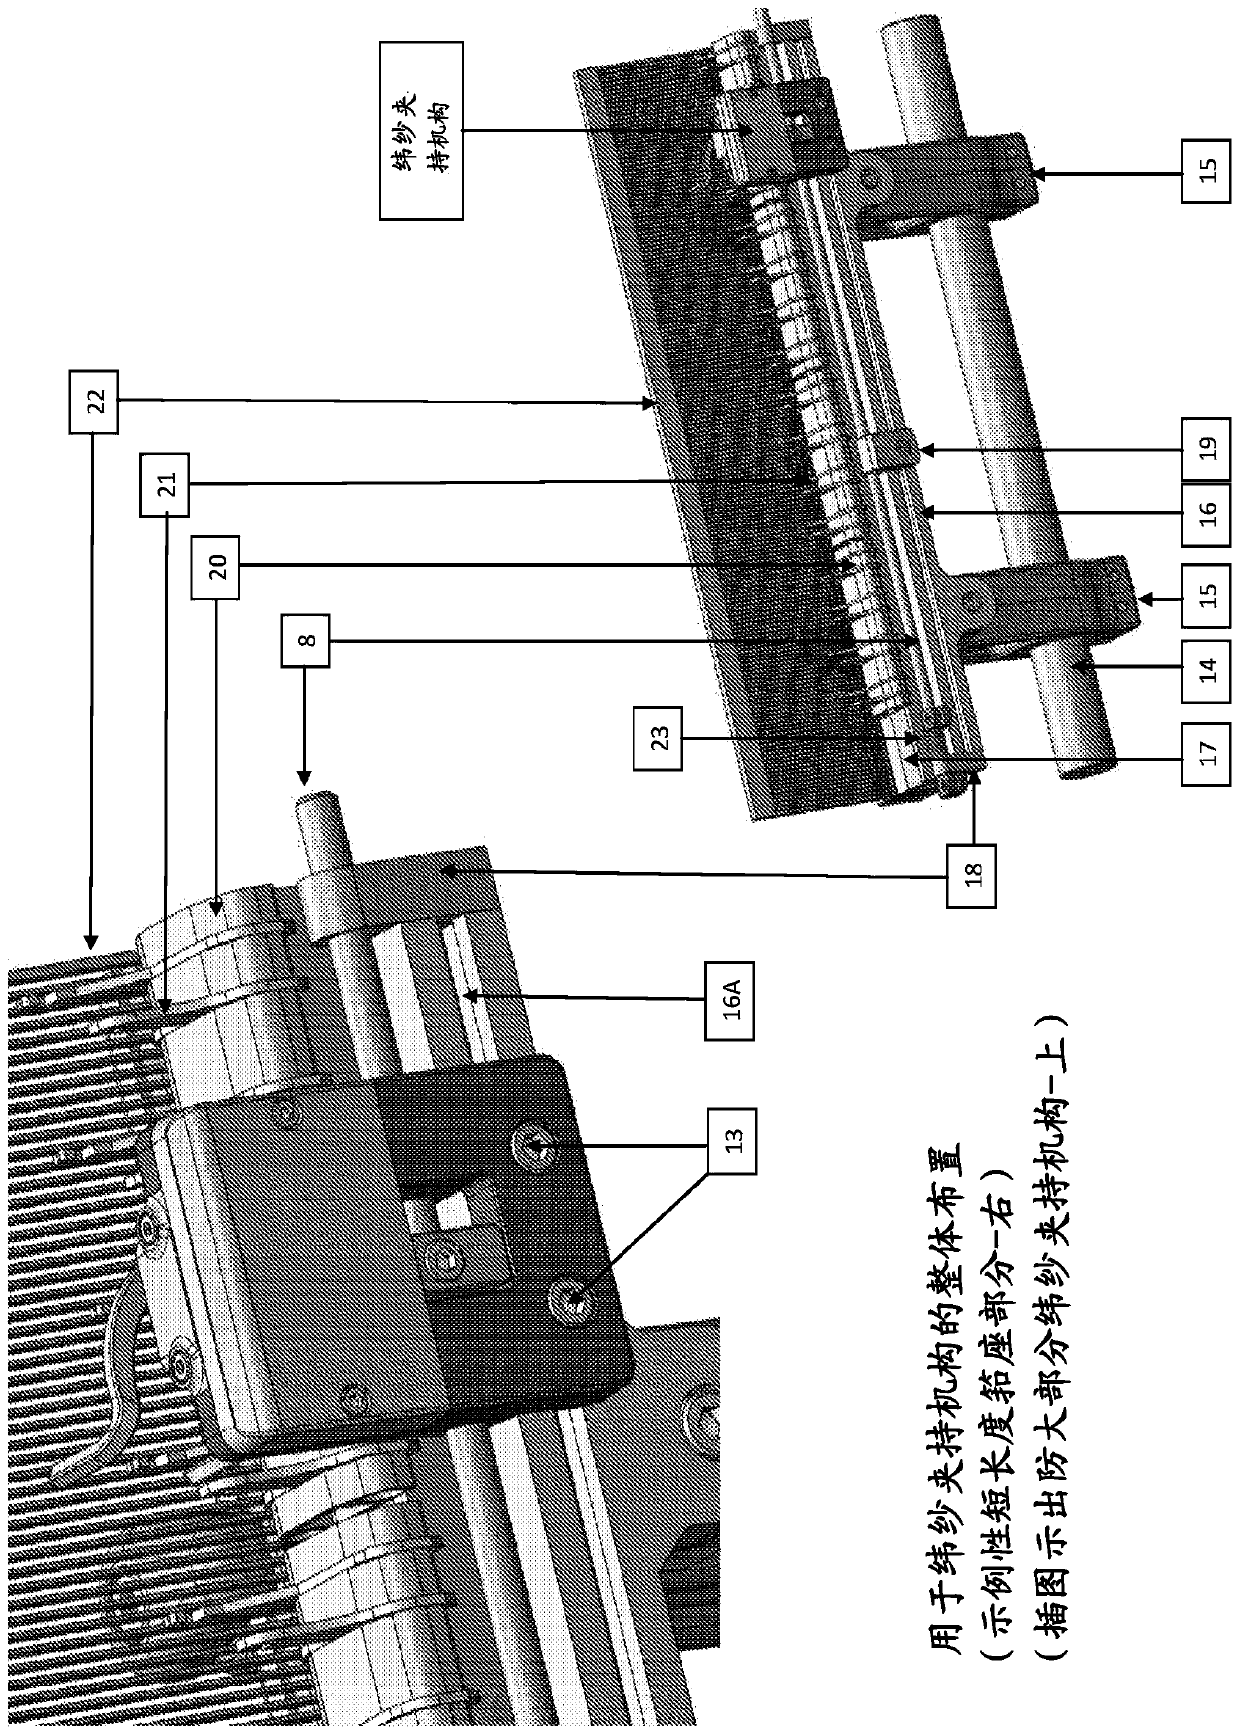 Weft gripping mechanism for shuttleles weaving machines